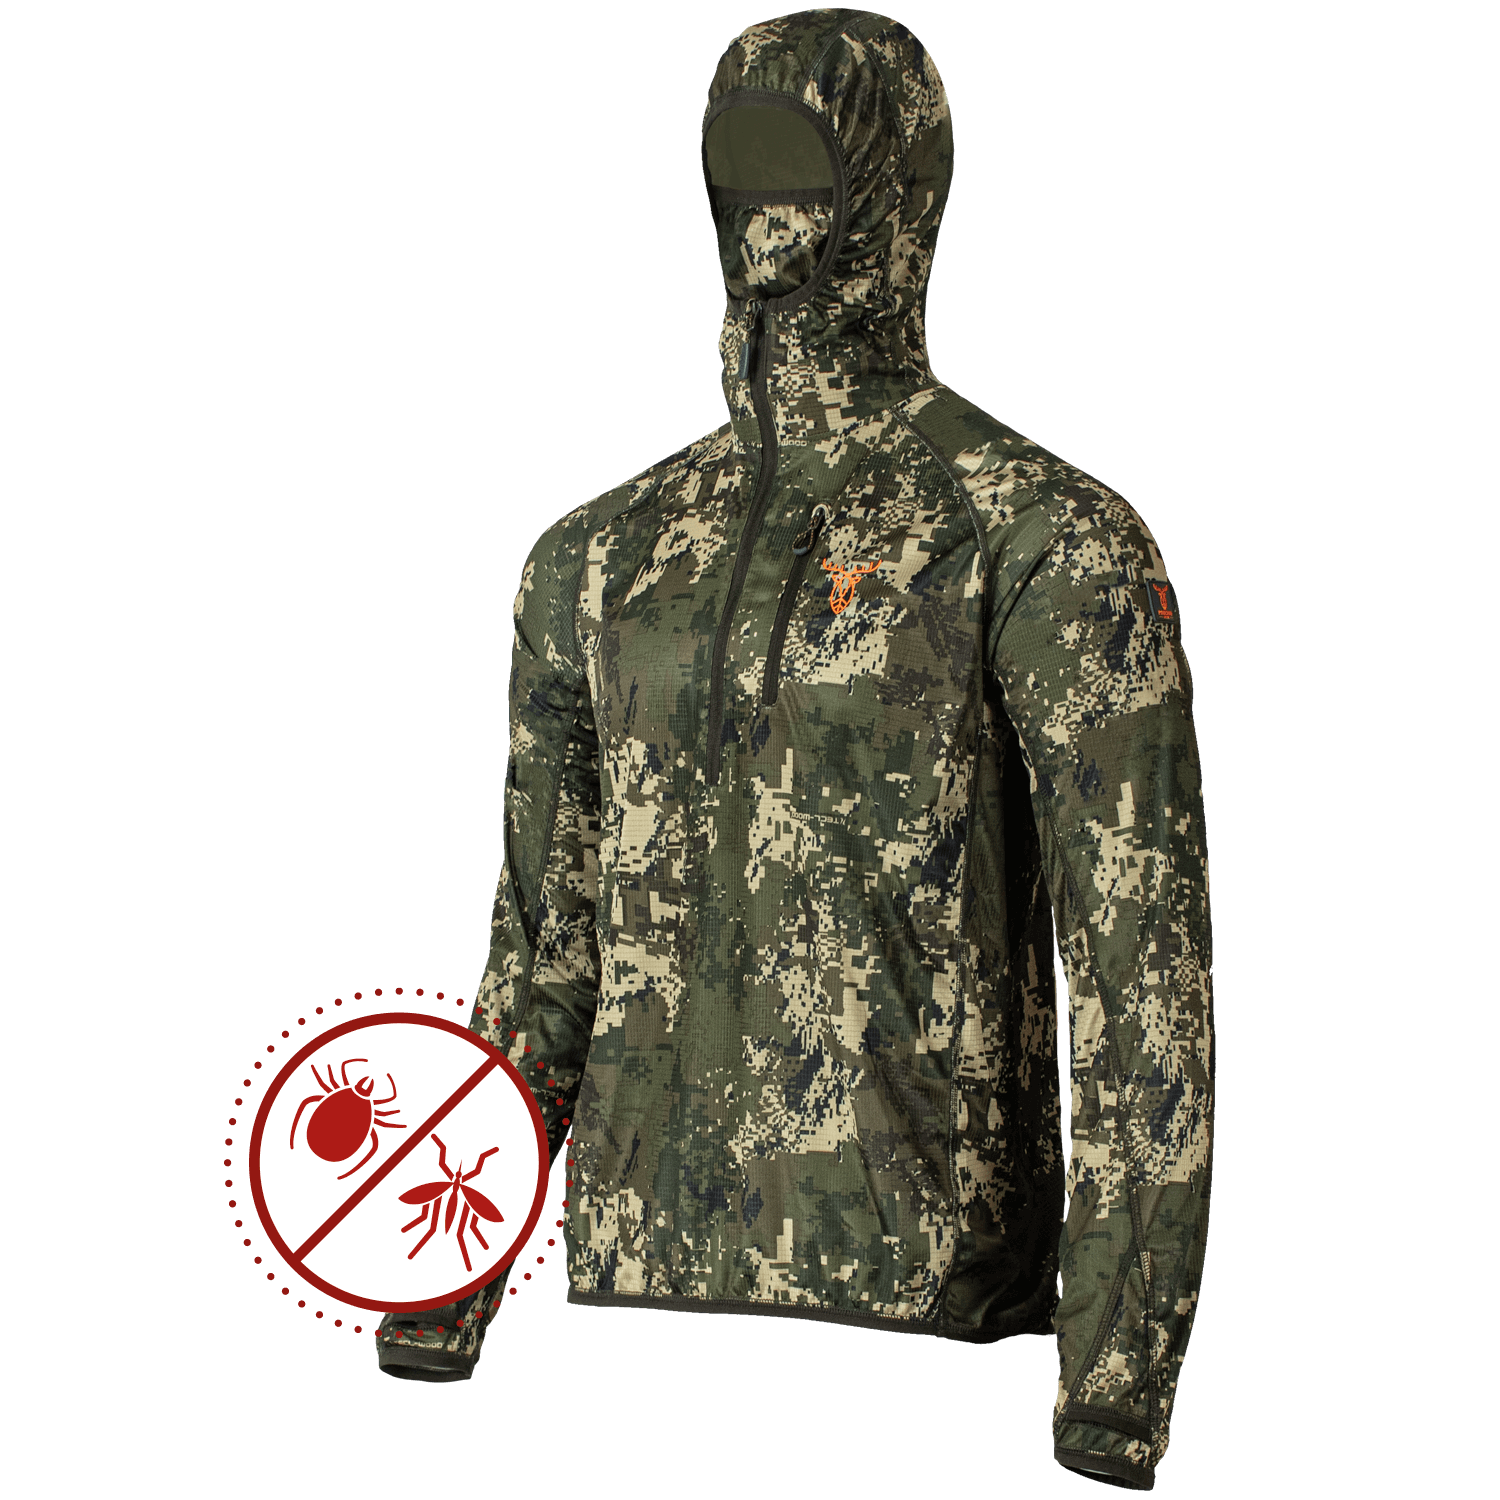  Pirscher Gear Ultralicht Tanatex overhemd met capuchon (Optimax) - Insecten- & tekenbescherming